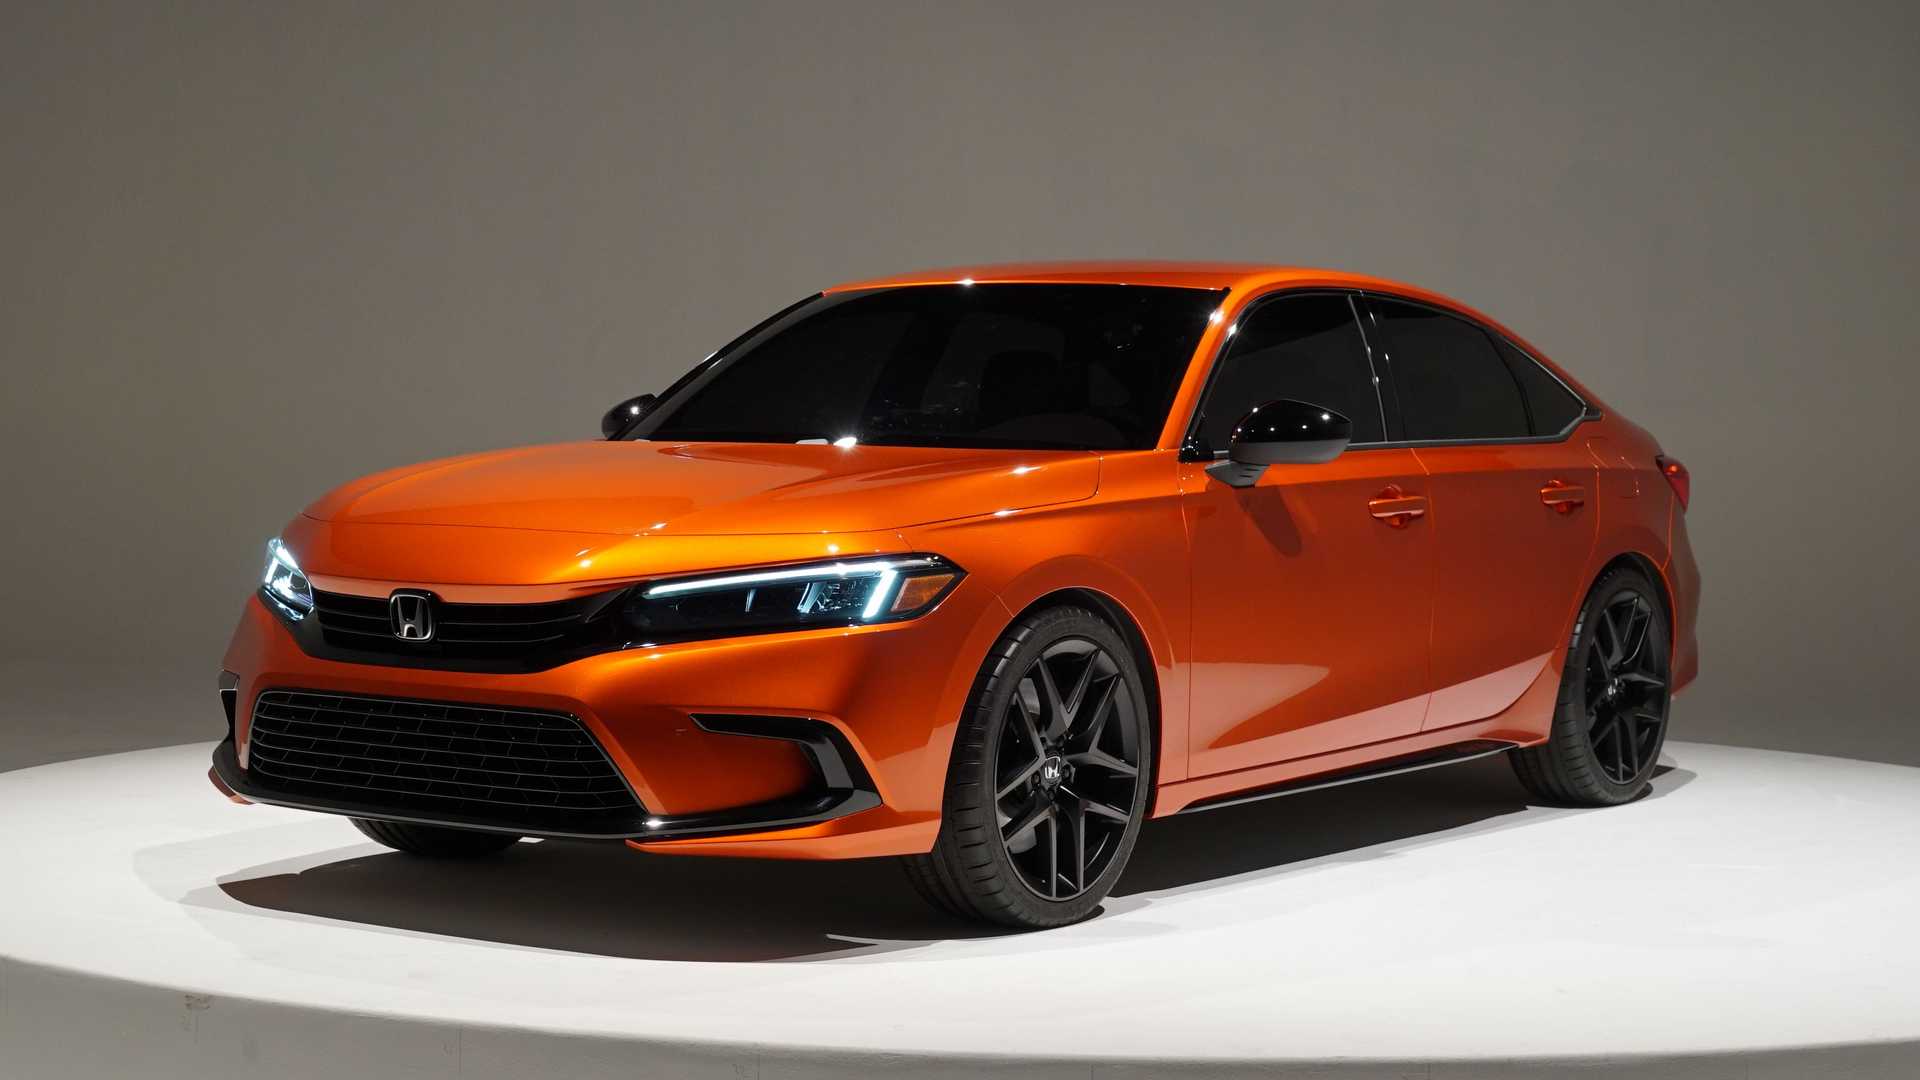 2022 Honda Civic prototype previews upcoming eleventh-gen model